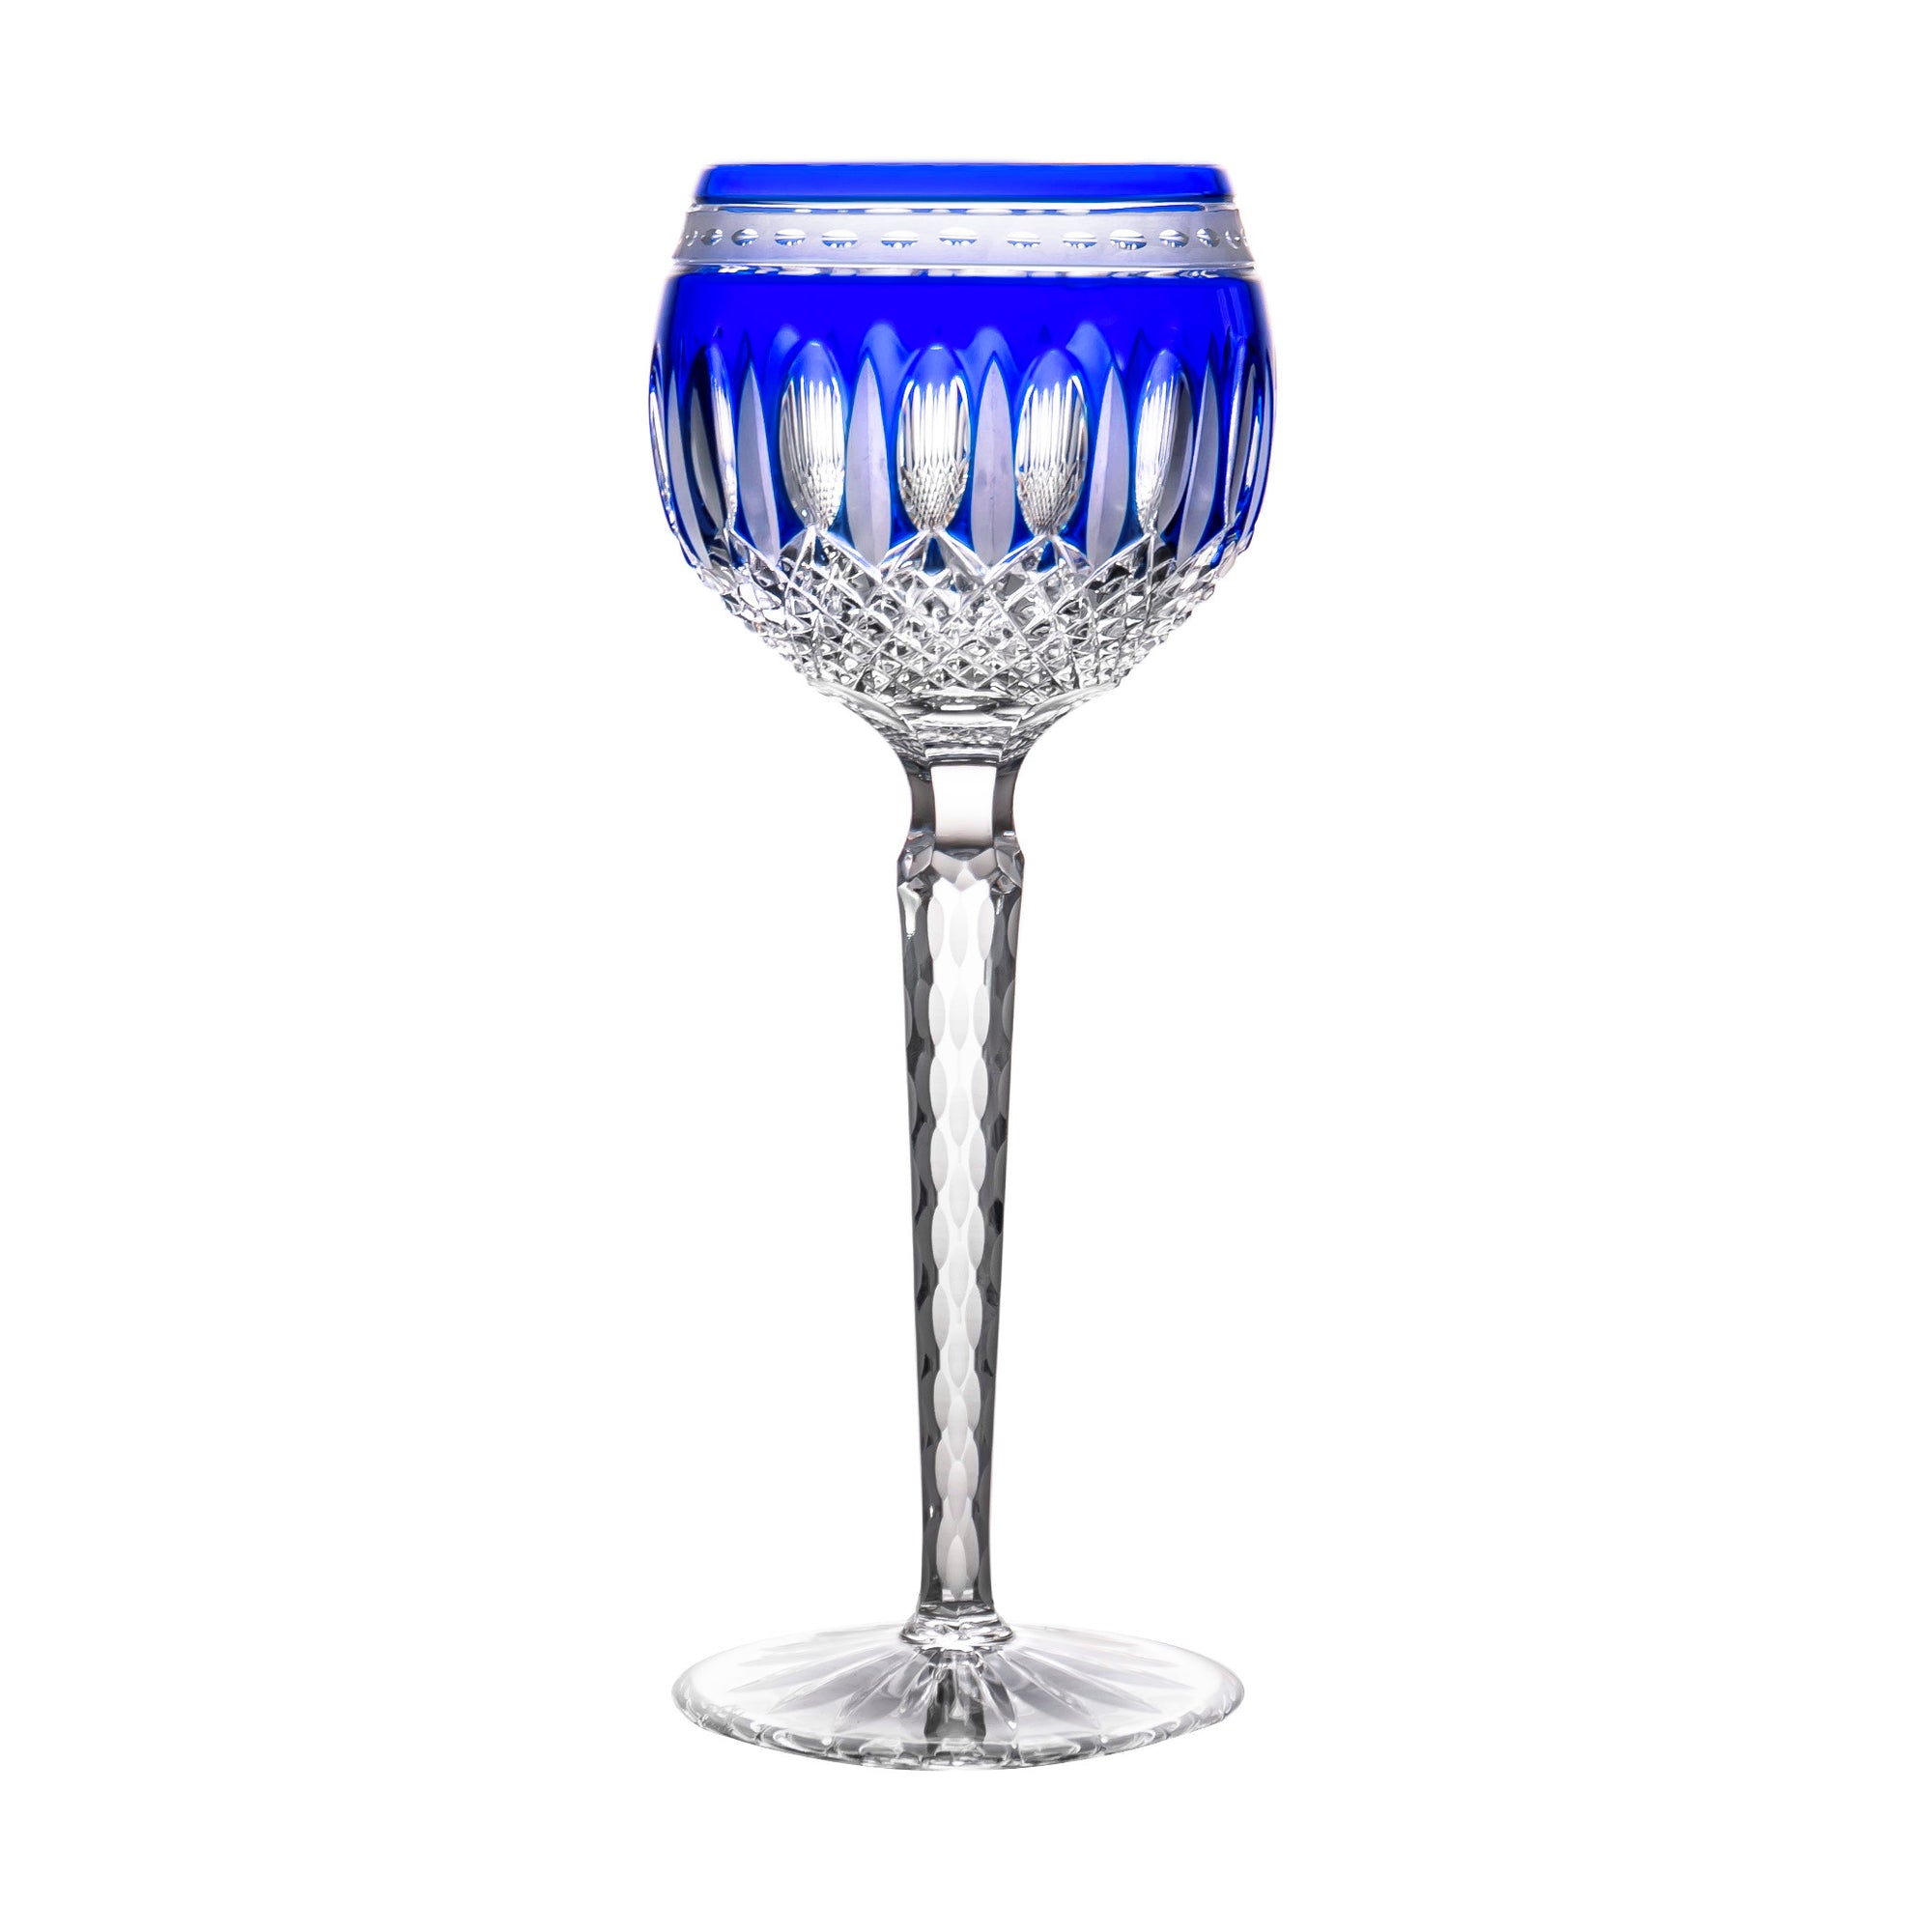 Clarendon Blue Small Wine Glass